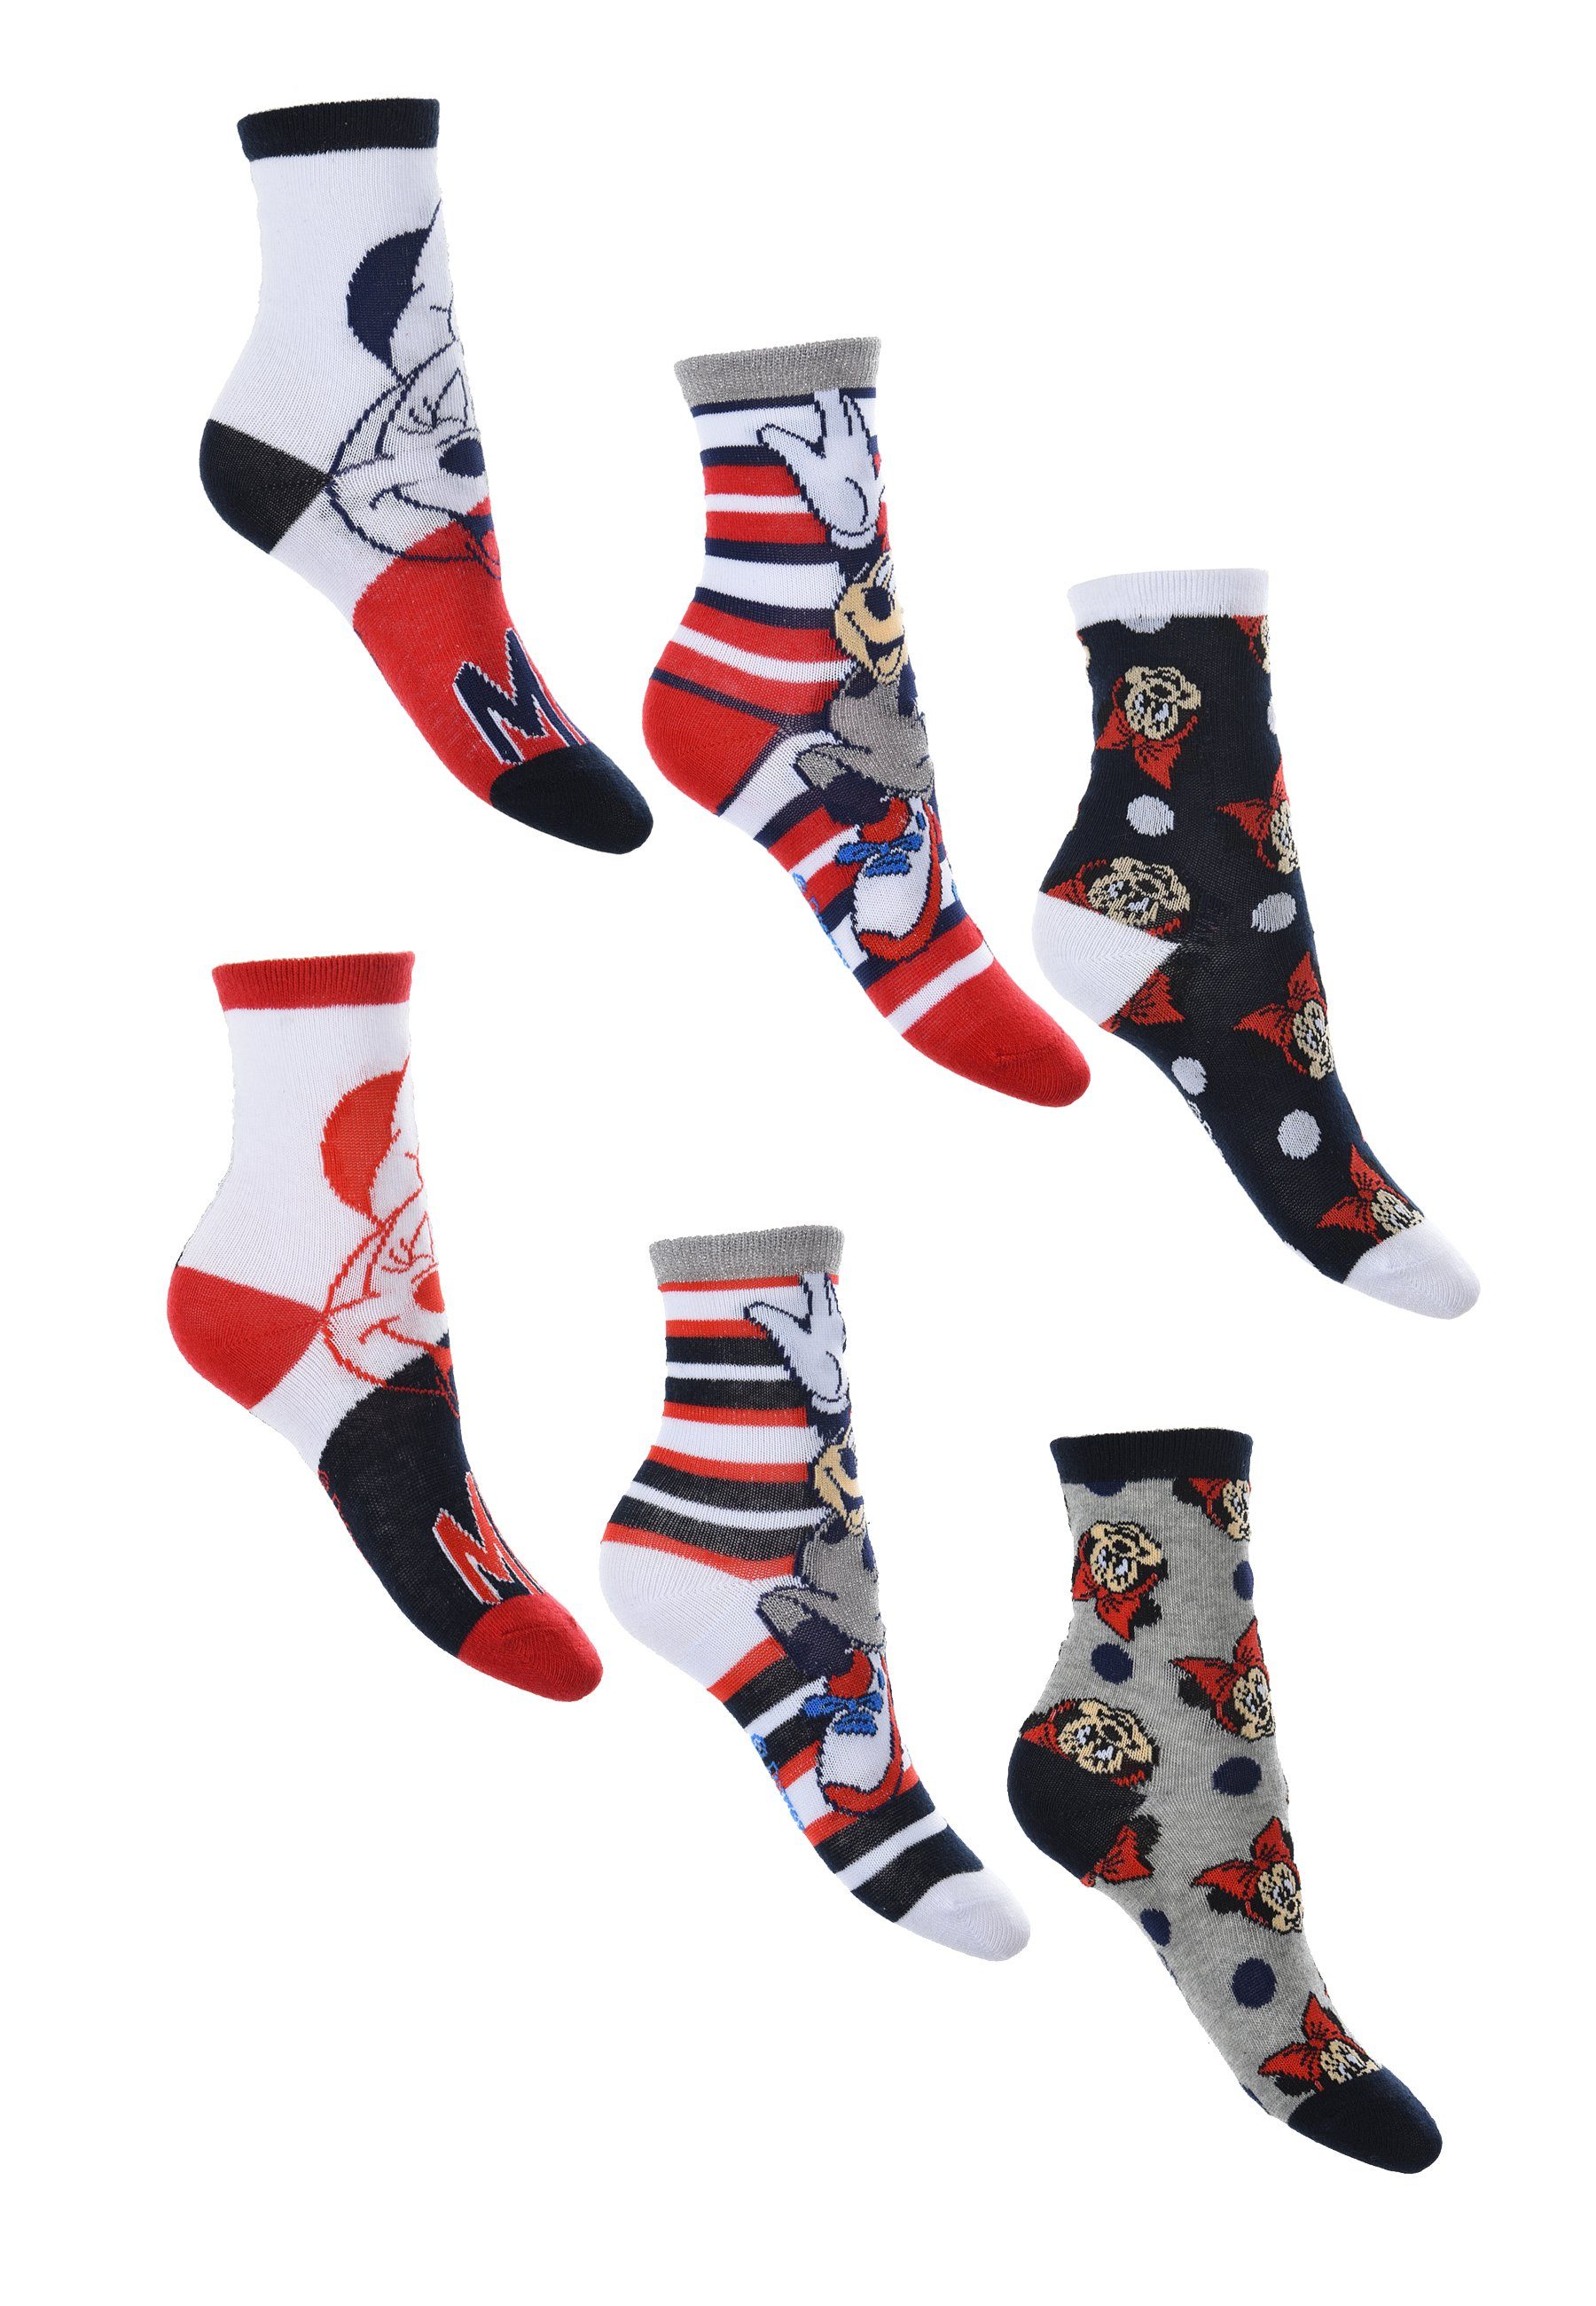 Disney Minnie Mouse Socken Kinder Mädchen Strümpfe Socken (6-Paar)